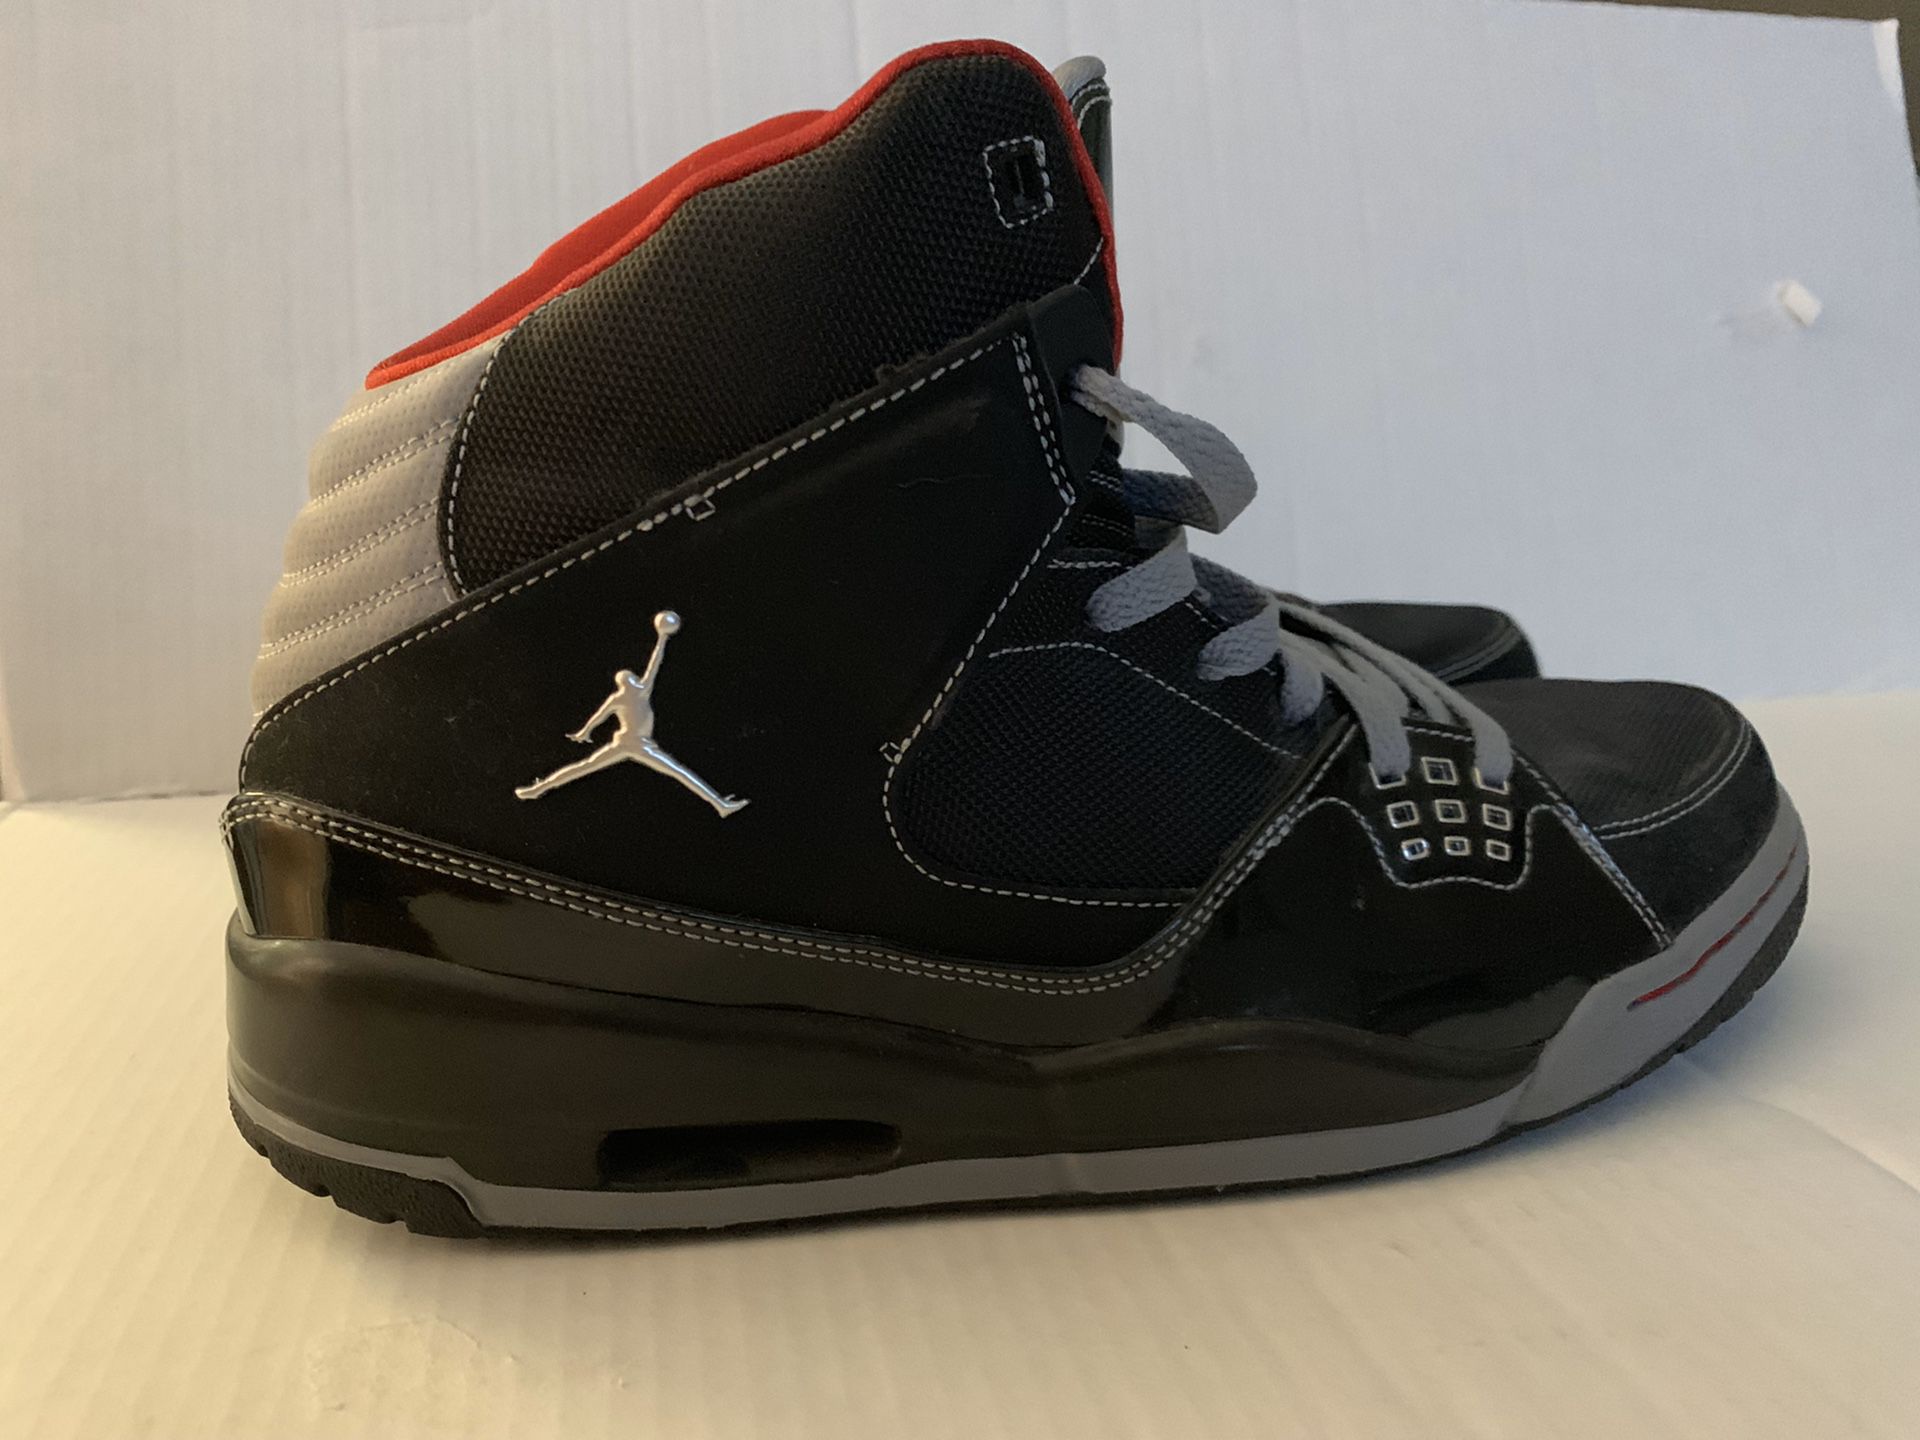 Nike Jordan SC-1 size 13